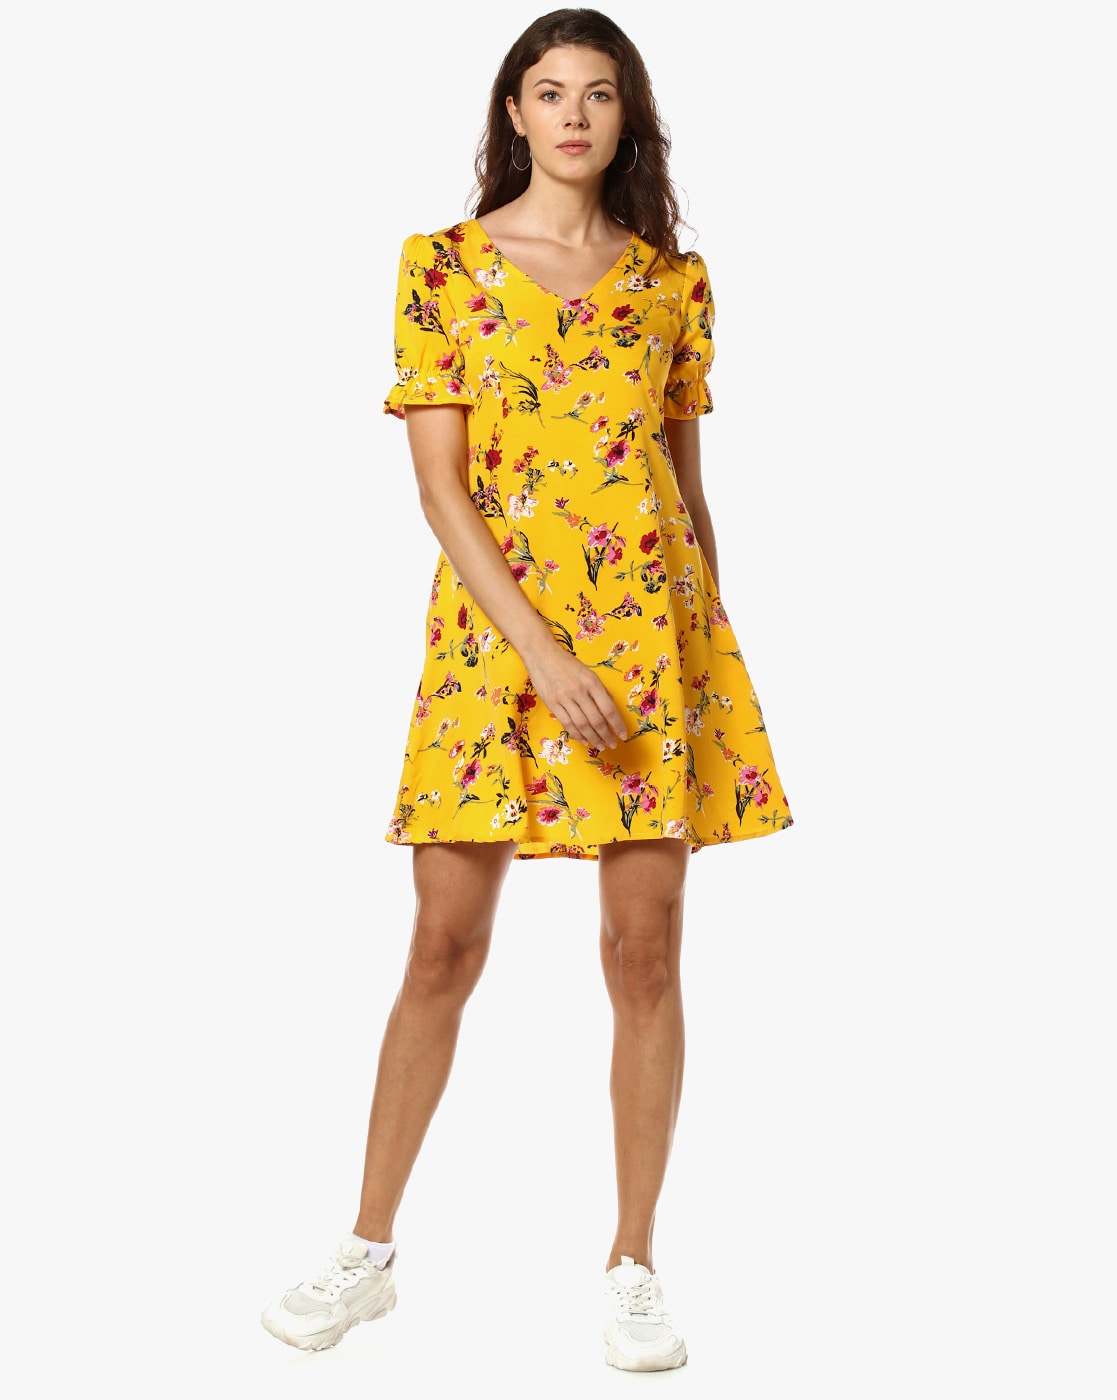 Buy Yellow Floral Jacquard Dress Online - Label Ritu Kumar International  Store View